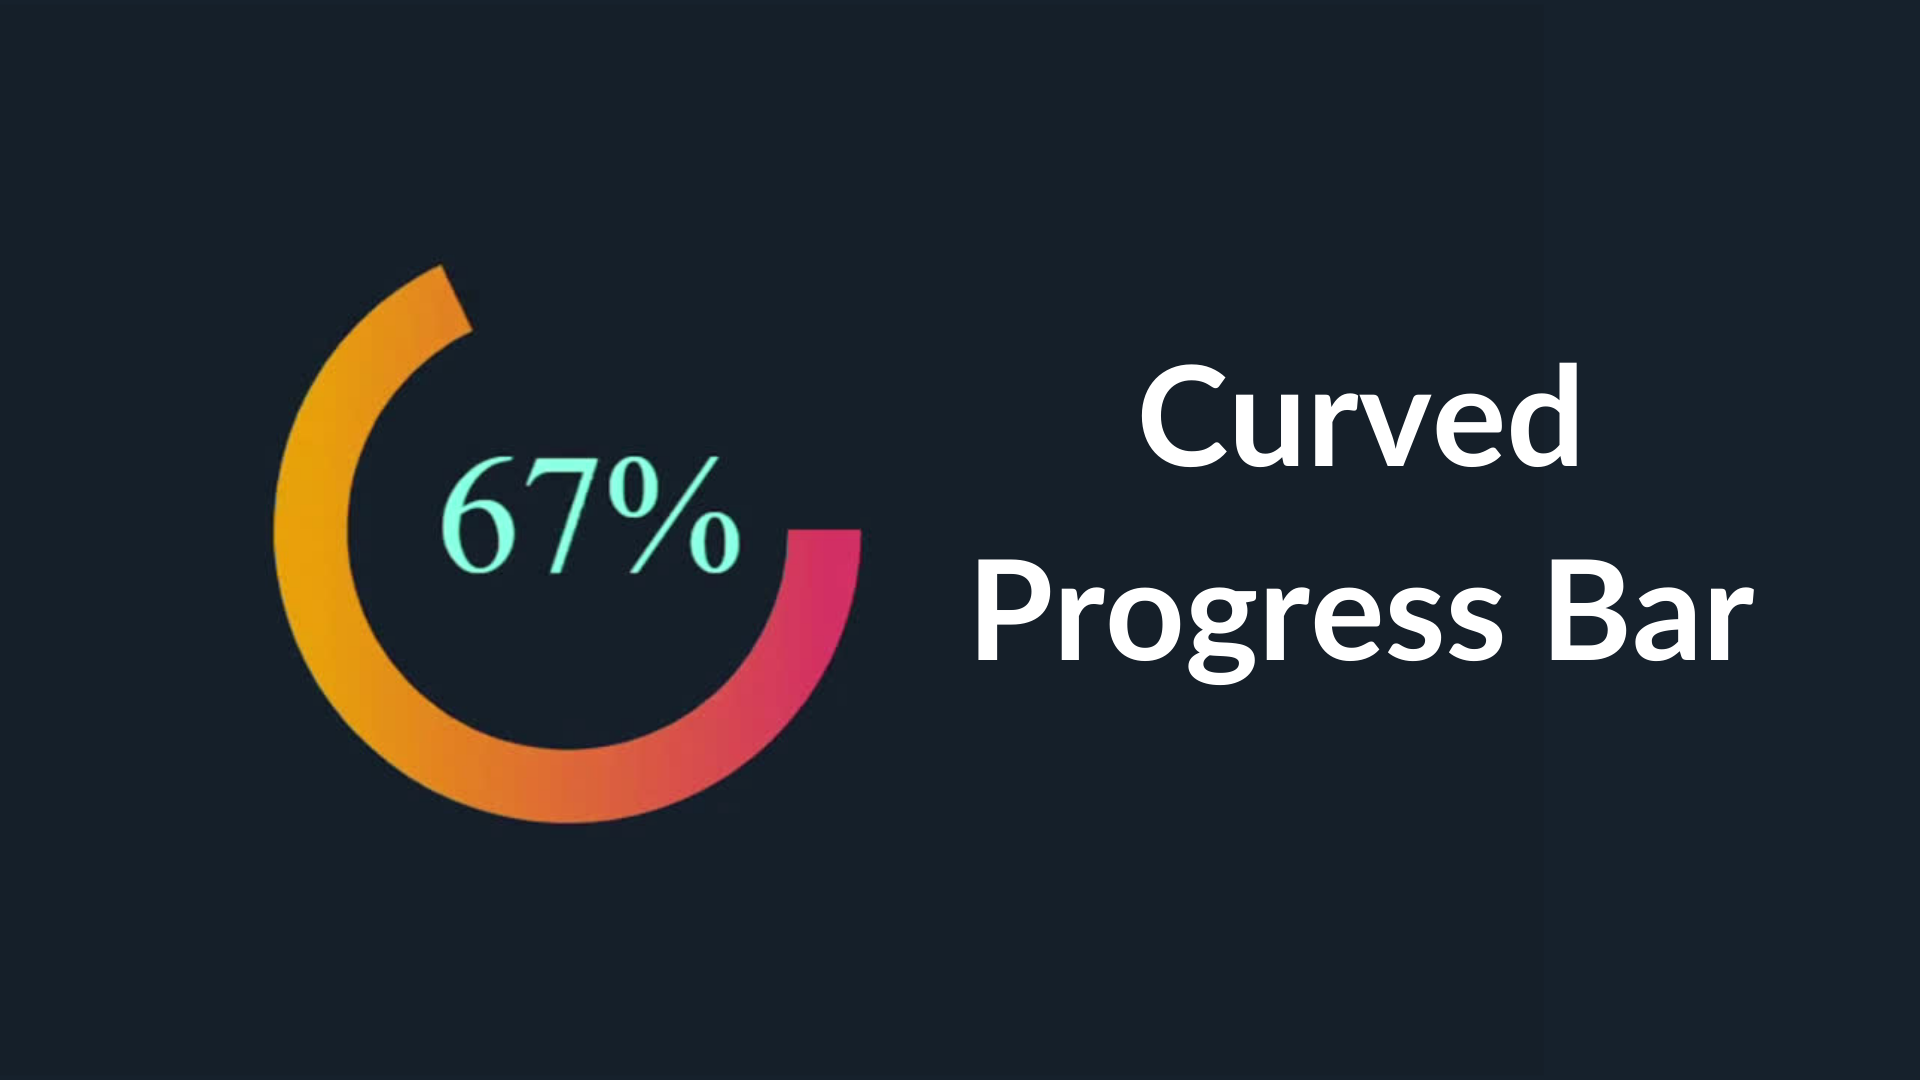 Curved Progress Bar